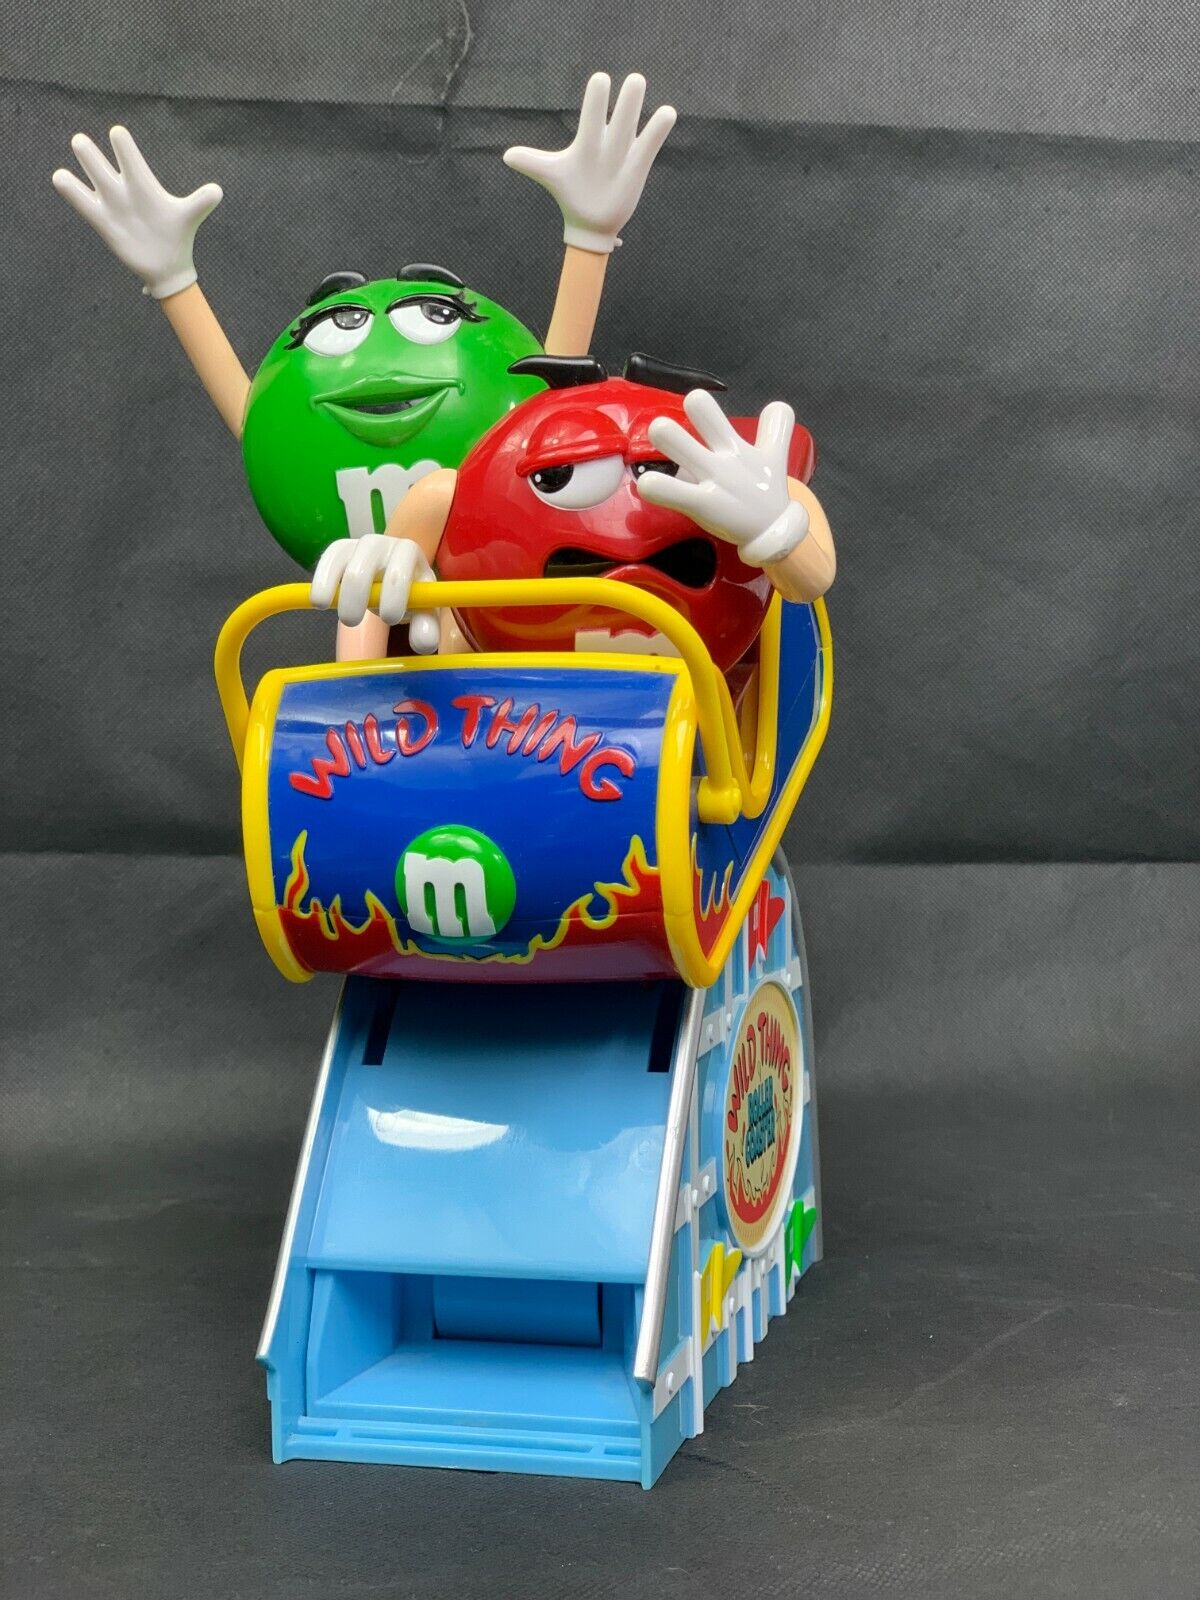 L👀K M&M Wild Thing Roller Coaster Candy Dispenser